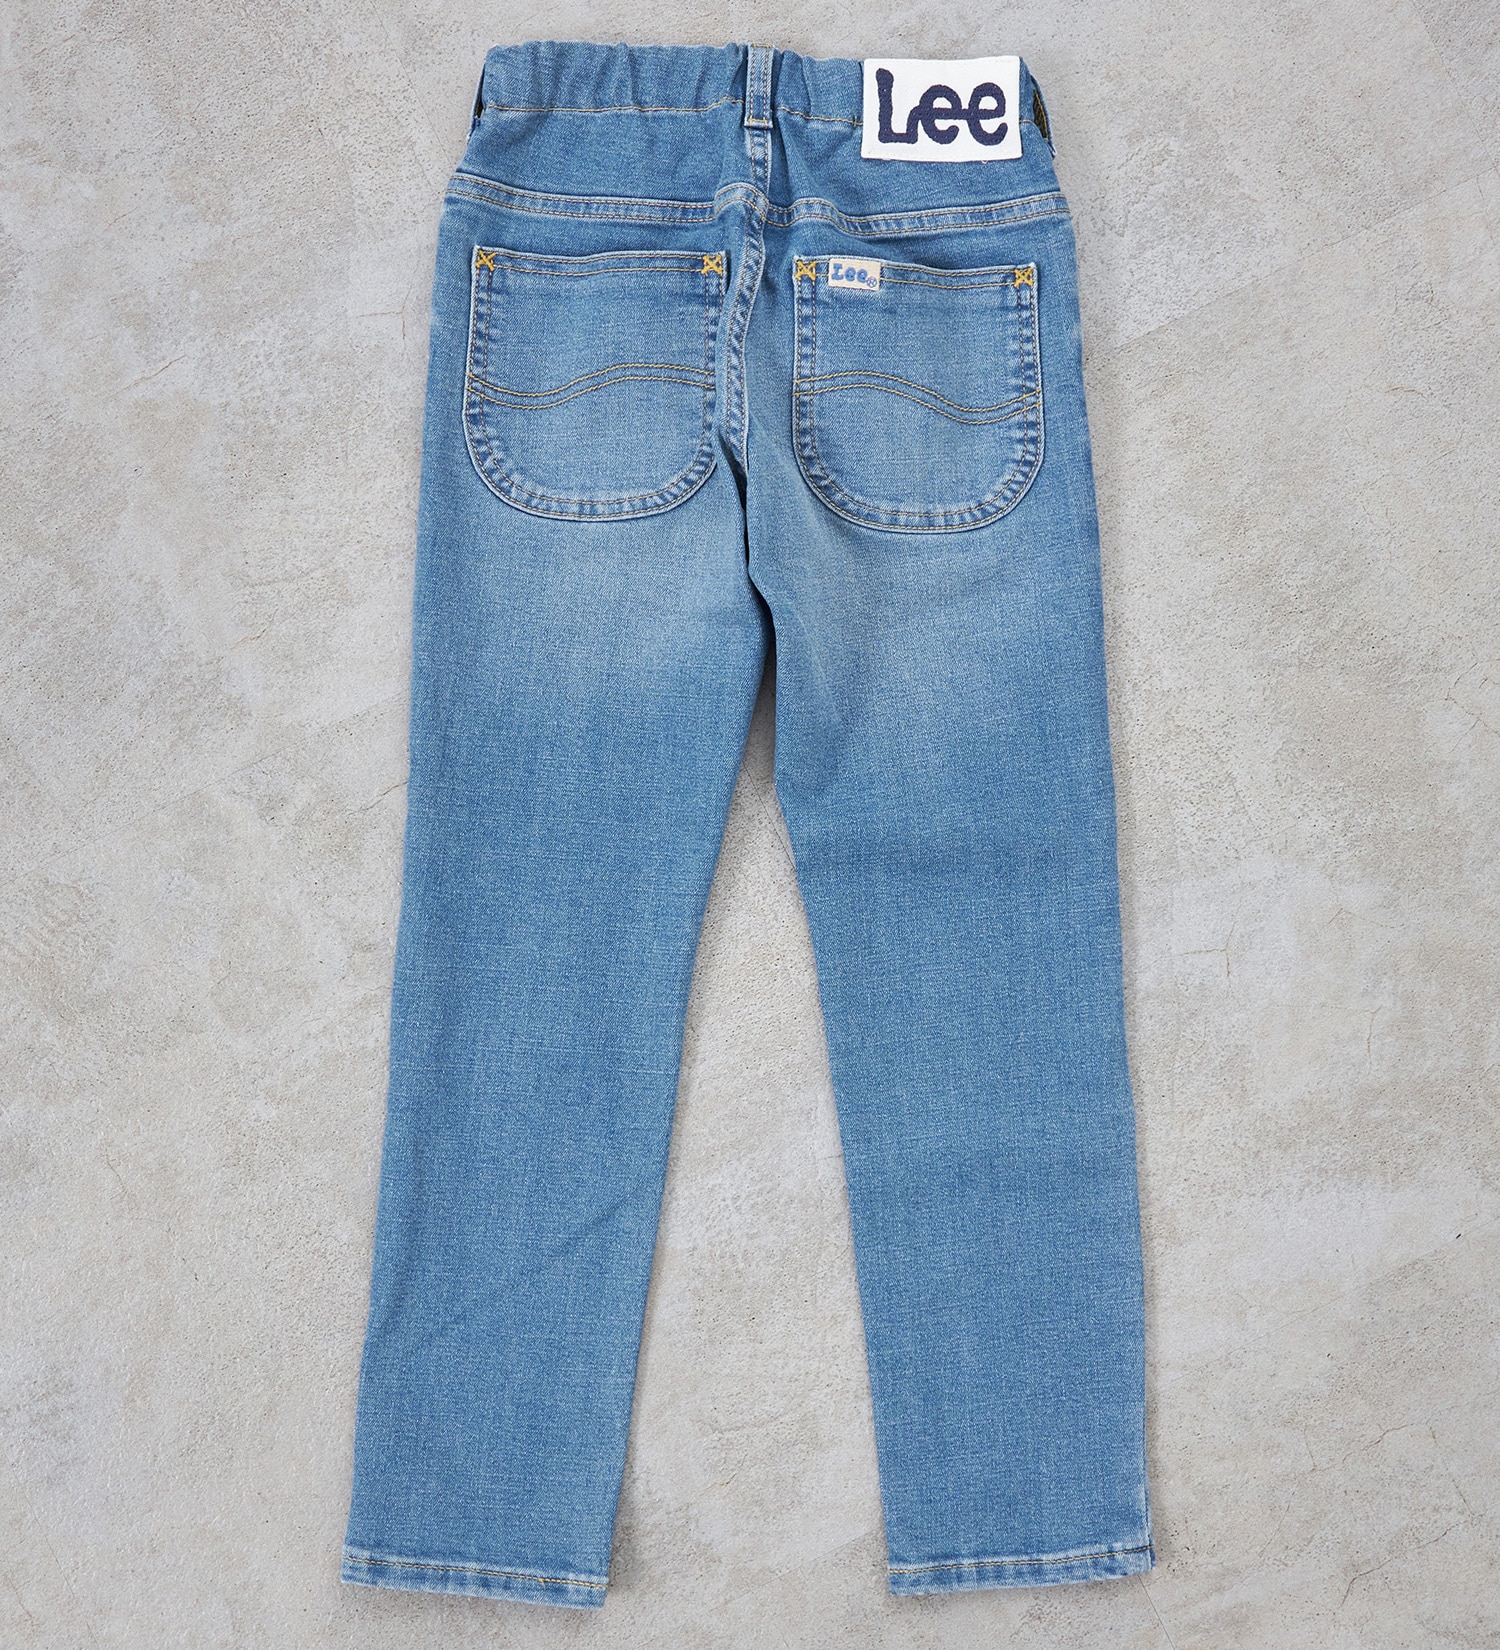 Lee(リー)の【100cm】ベビー ストレッチ/ストレートデニムパンツ|パンツ/デニムパンツ/キッズ|中色ブルー